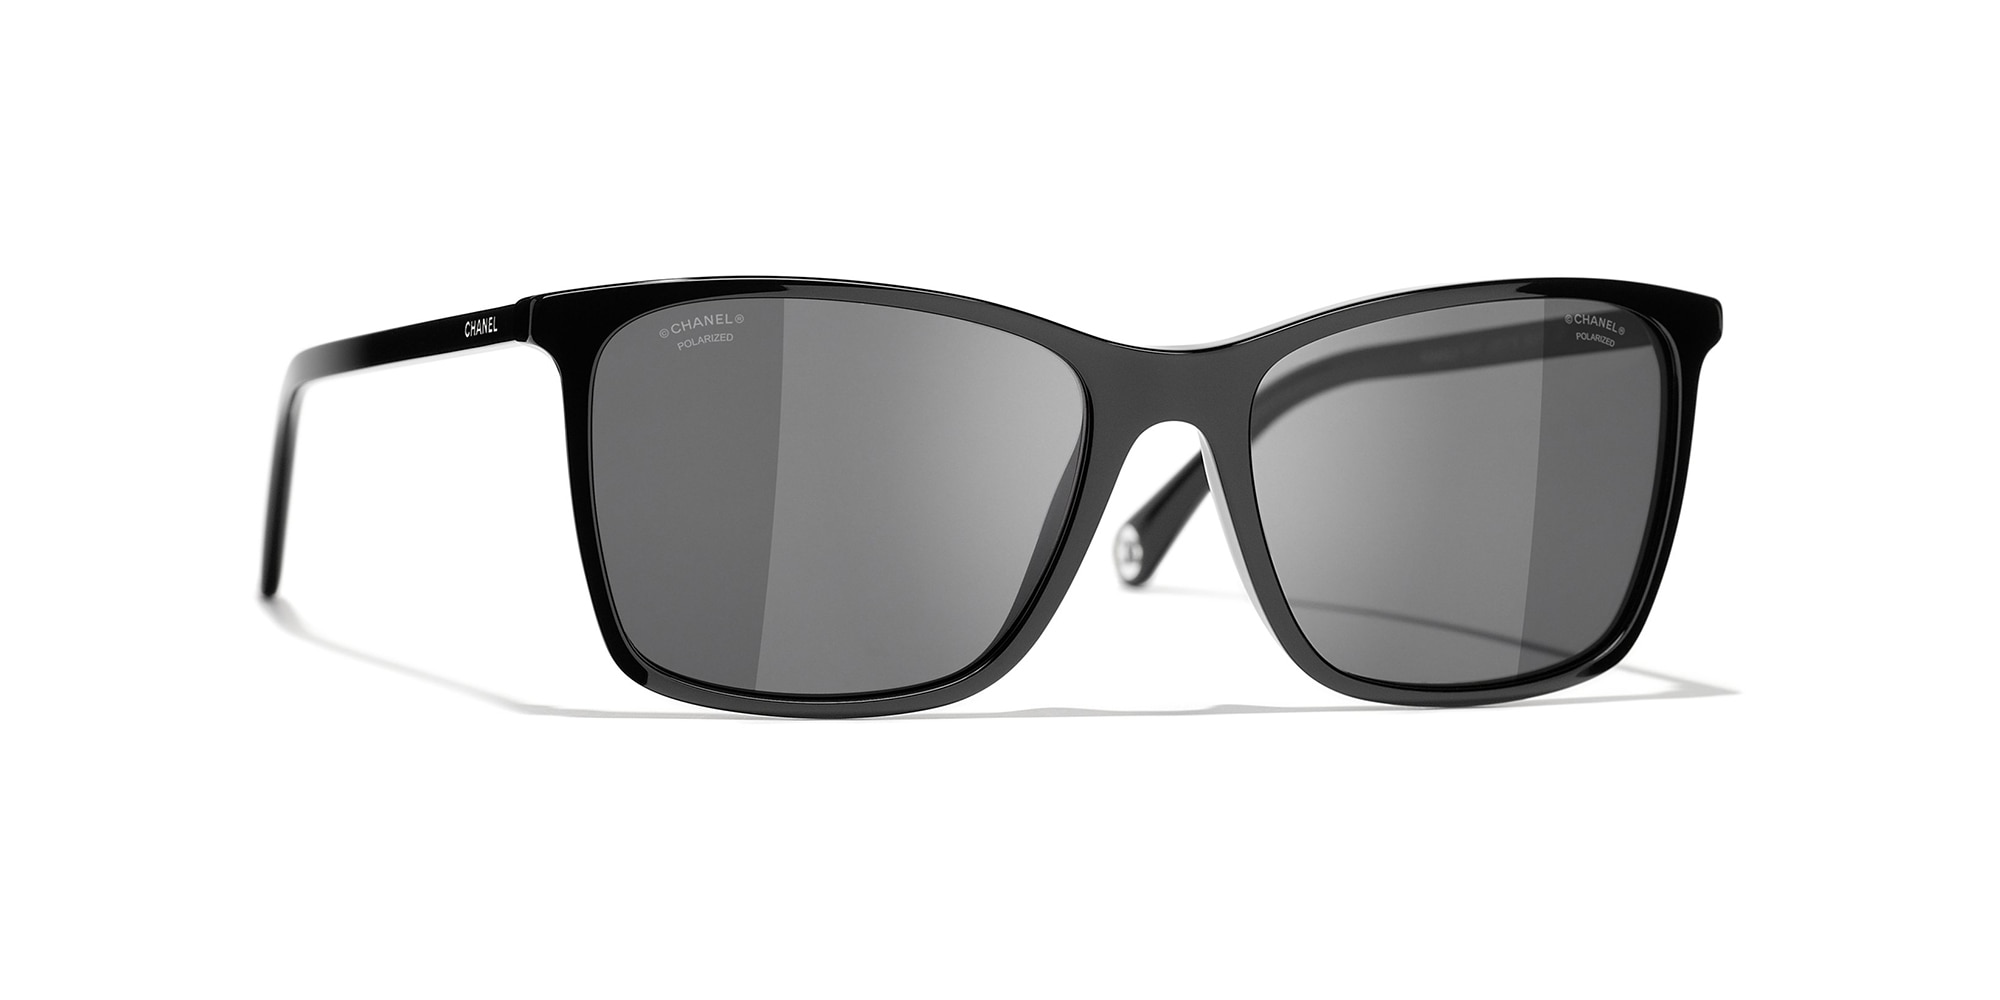 Sunglasses Chanel  Black cat eye sunglasses  CH5416C5343